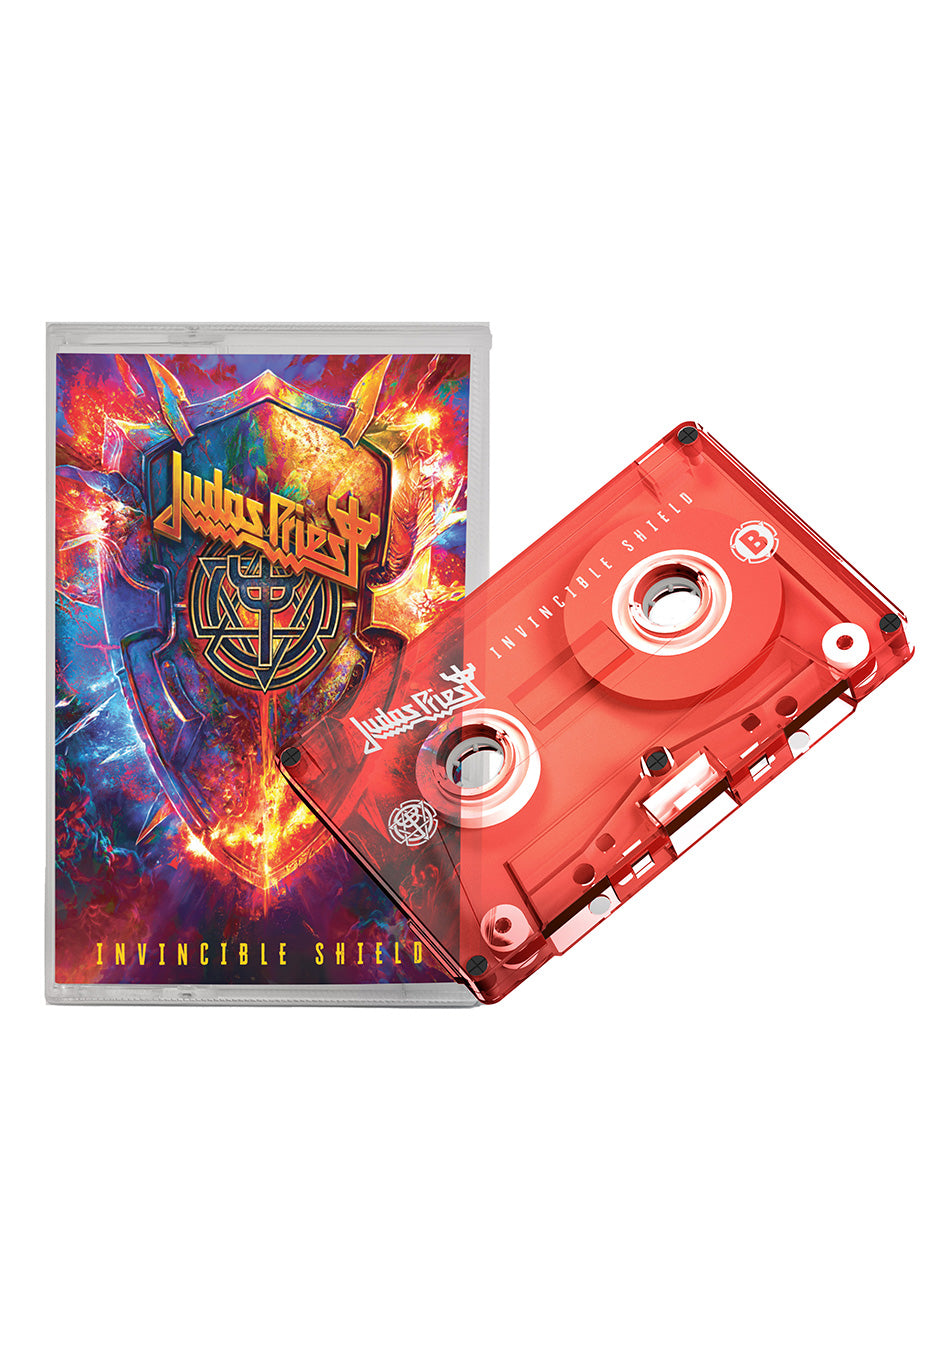 Judas Pirest - Invincible Shield Ltd. - MC